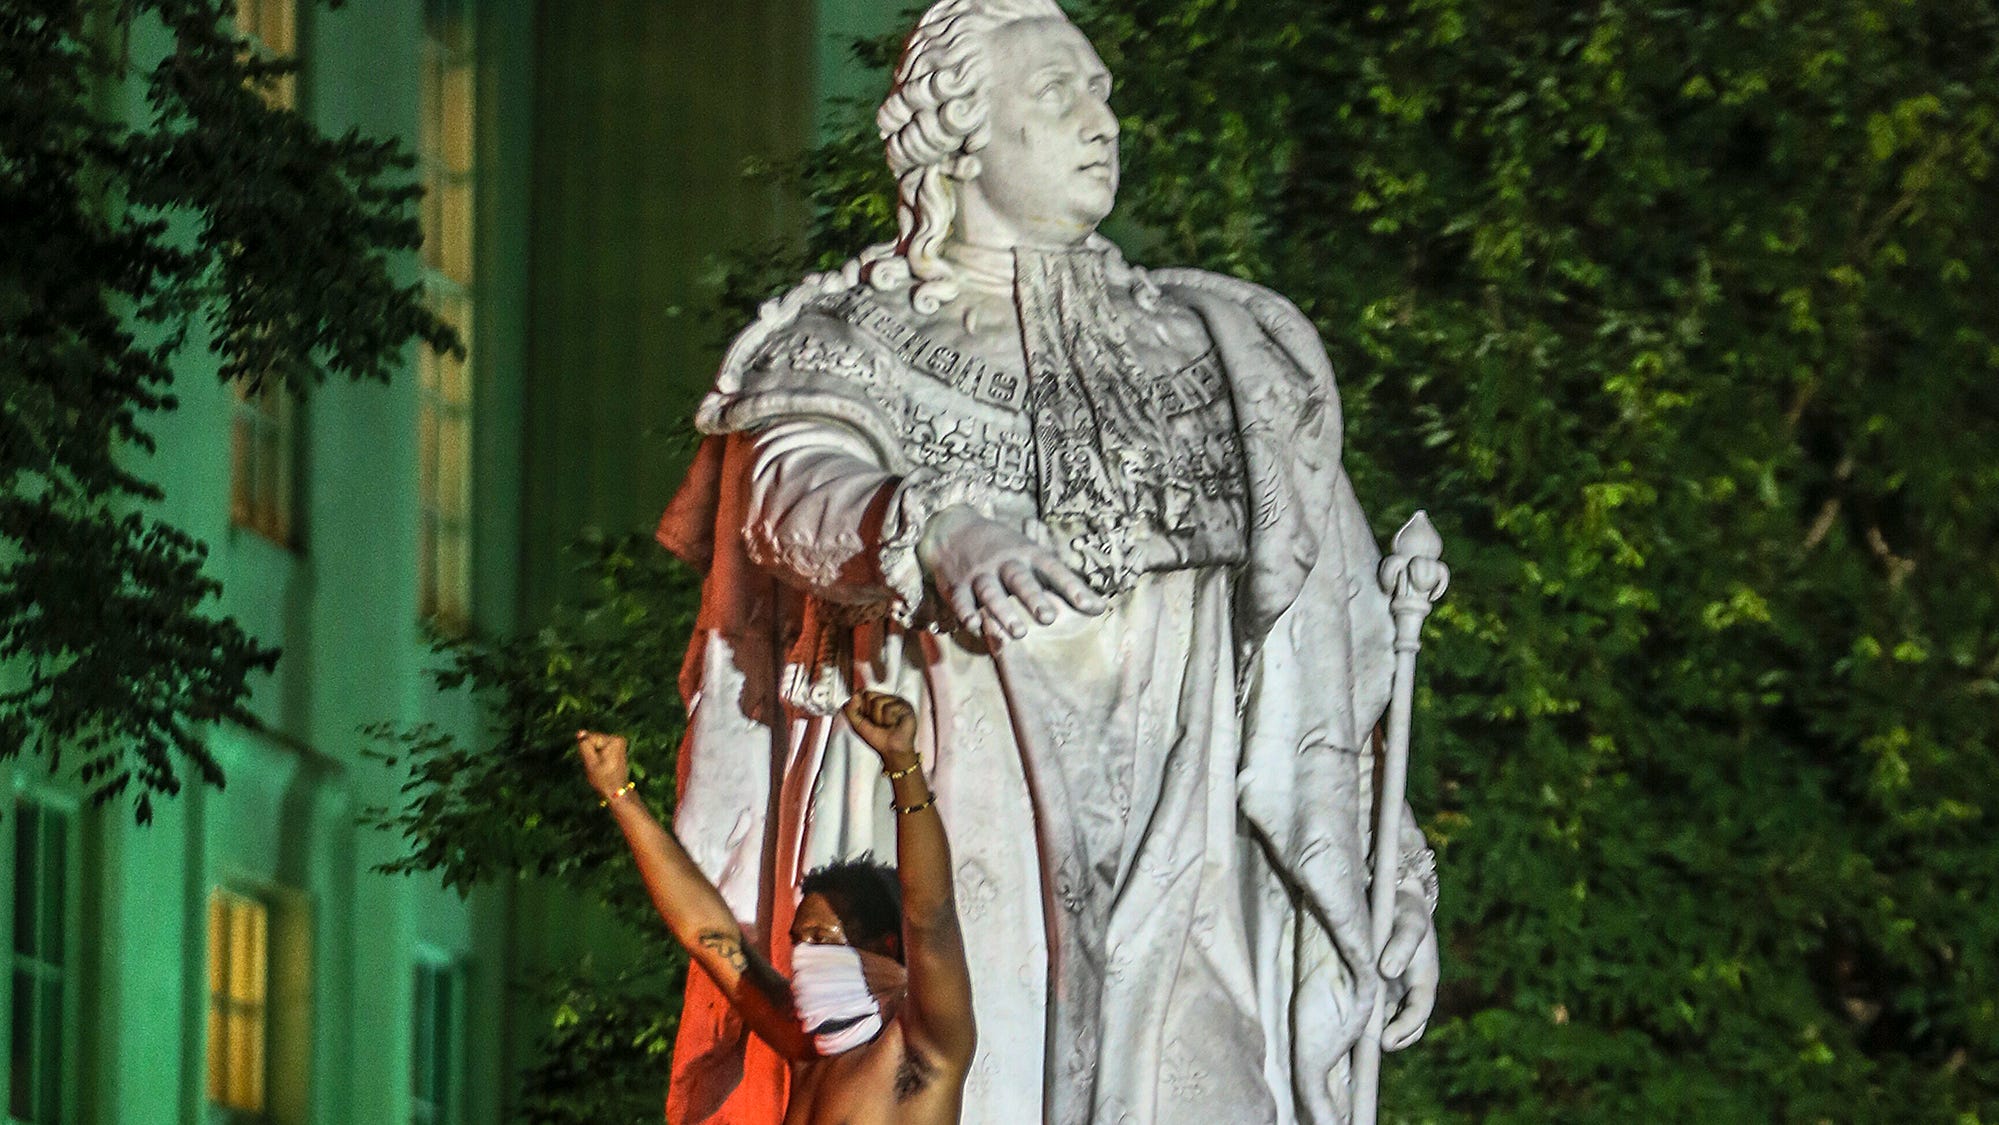 King Louis XVI statue vandalized in downtown Louisville, 3 arrested